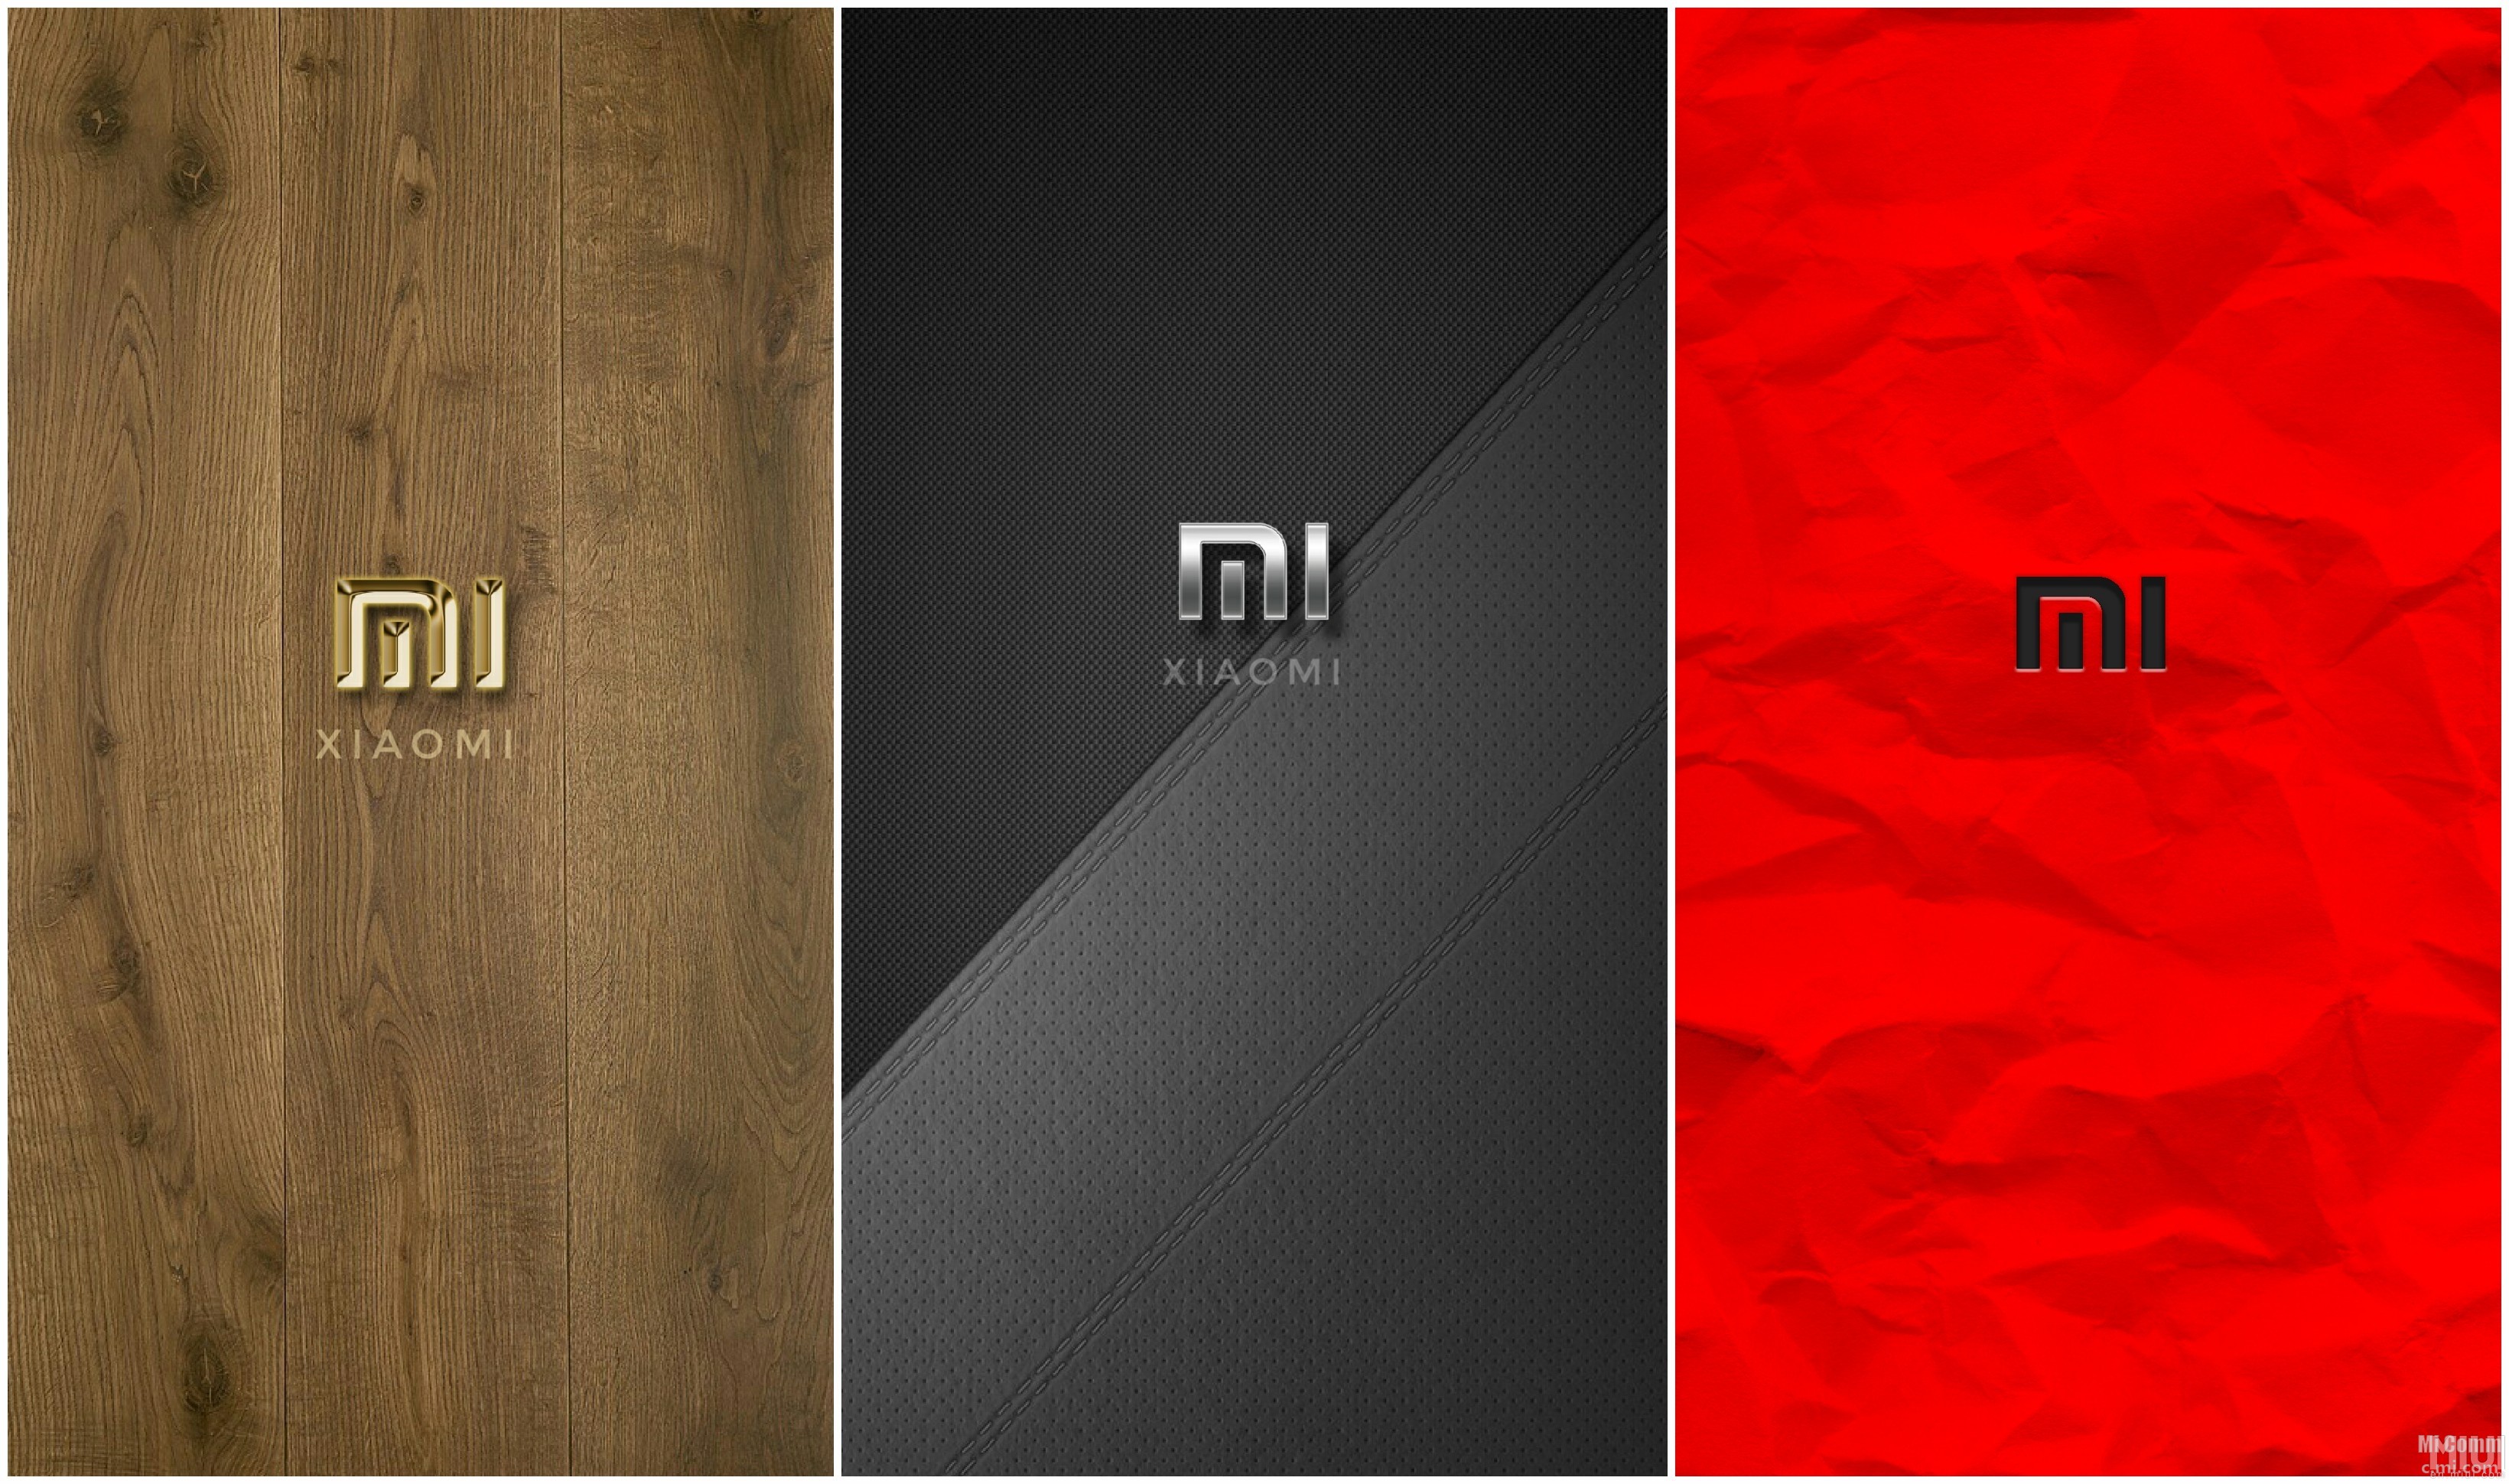 Xiaomi 14 wallpaper download. Xiaomi логотип. Обои ксиоми. Красивый логотип Xiaomi. Оригинальные обои Сяоми.